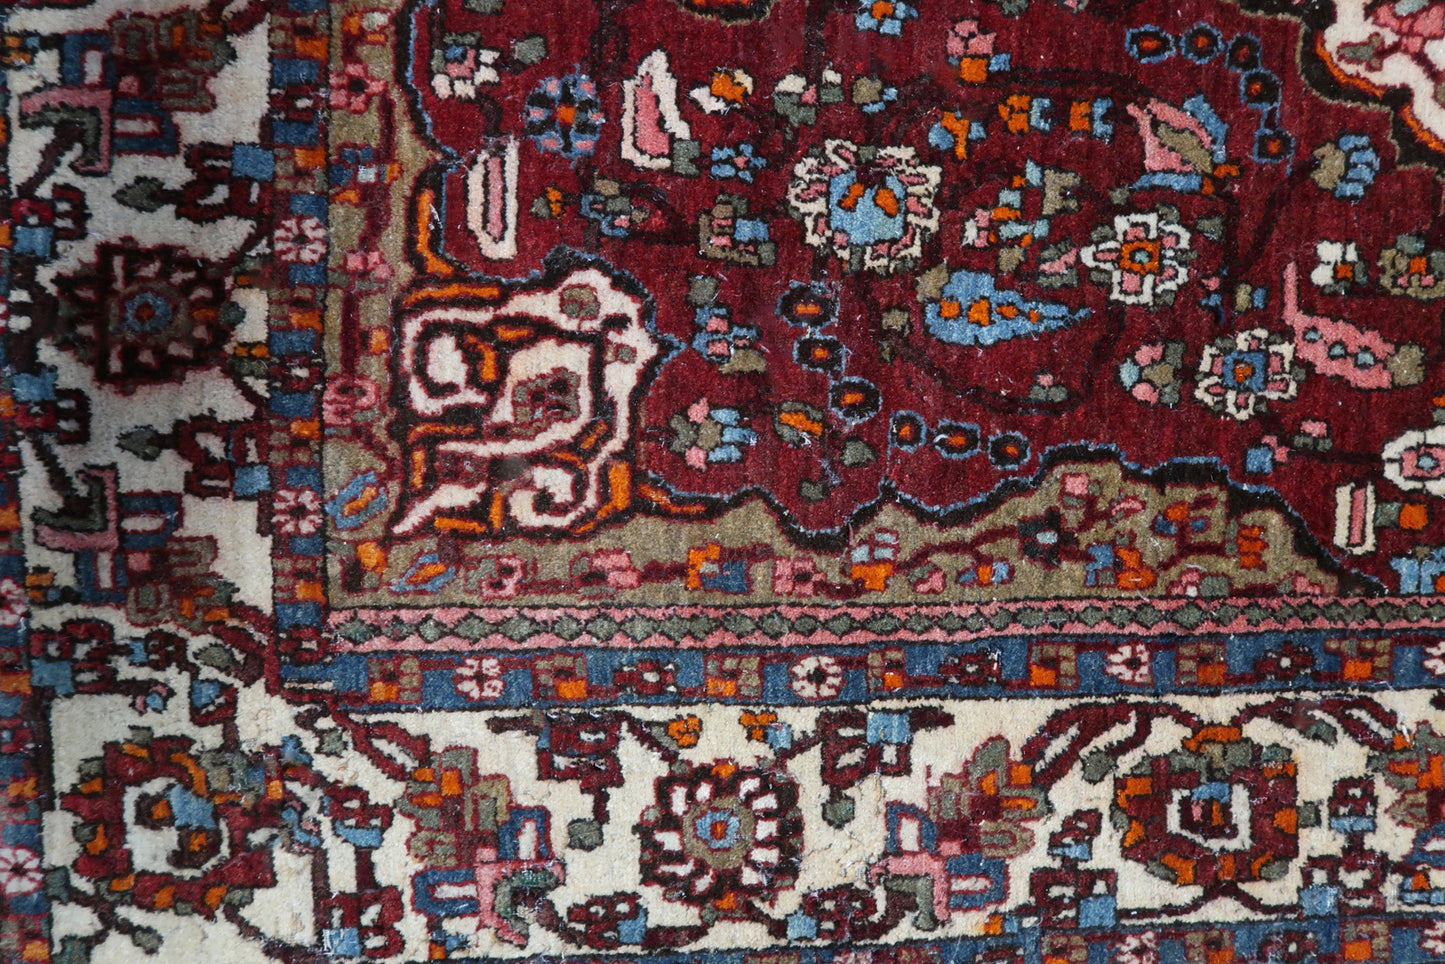 Antique Oriental Carpet - Intricate Patterns